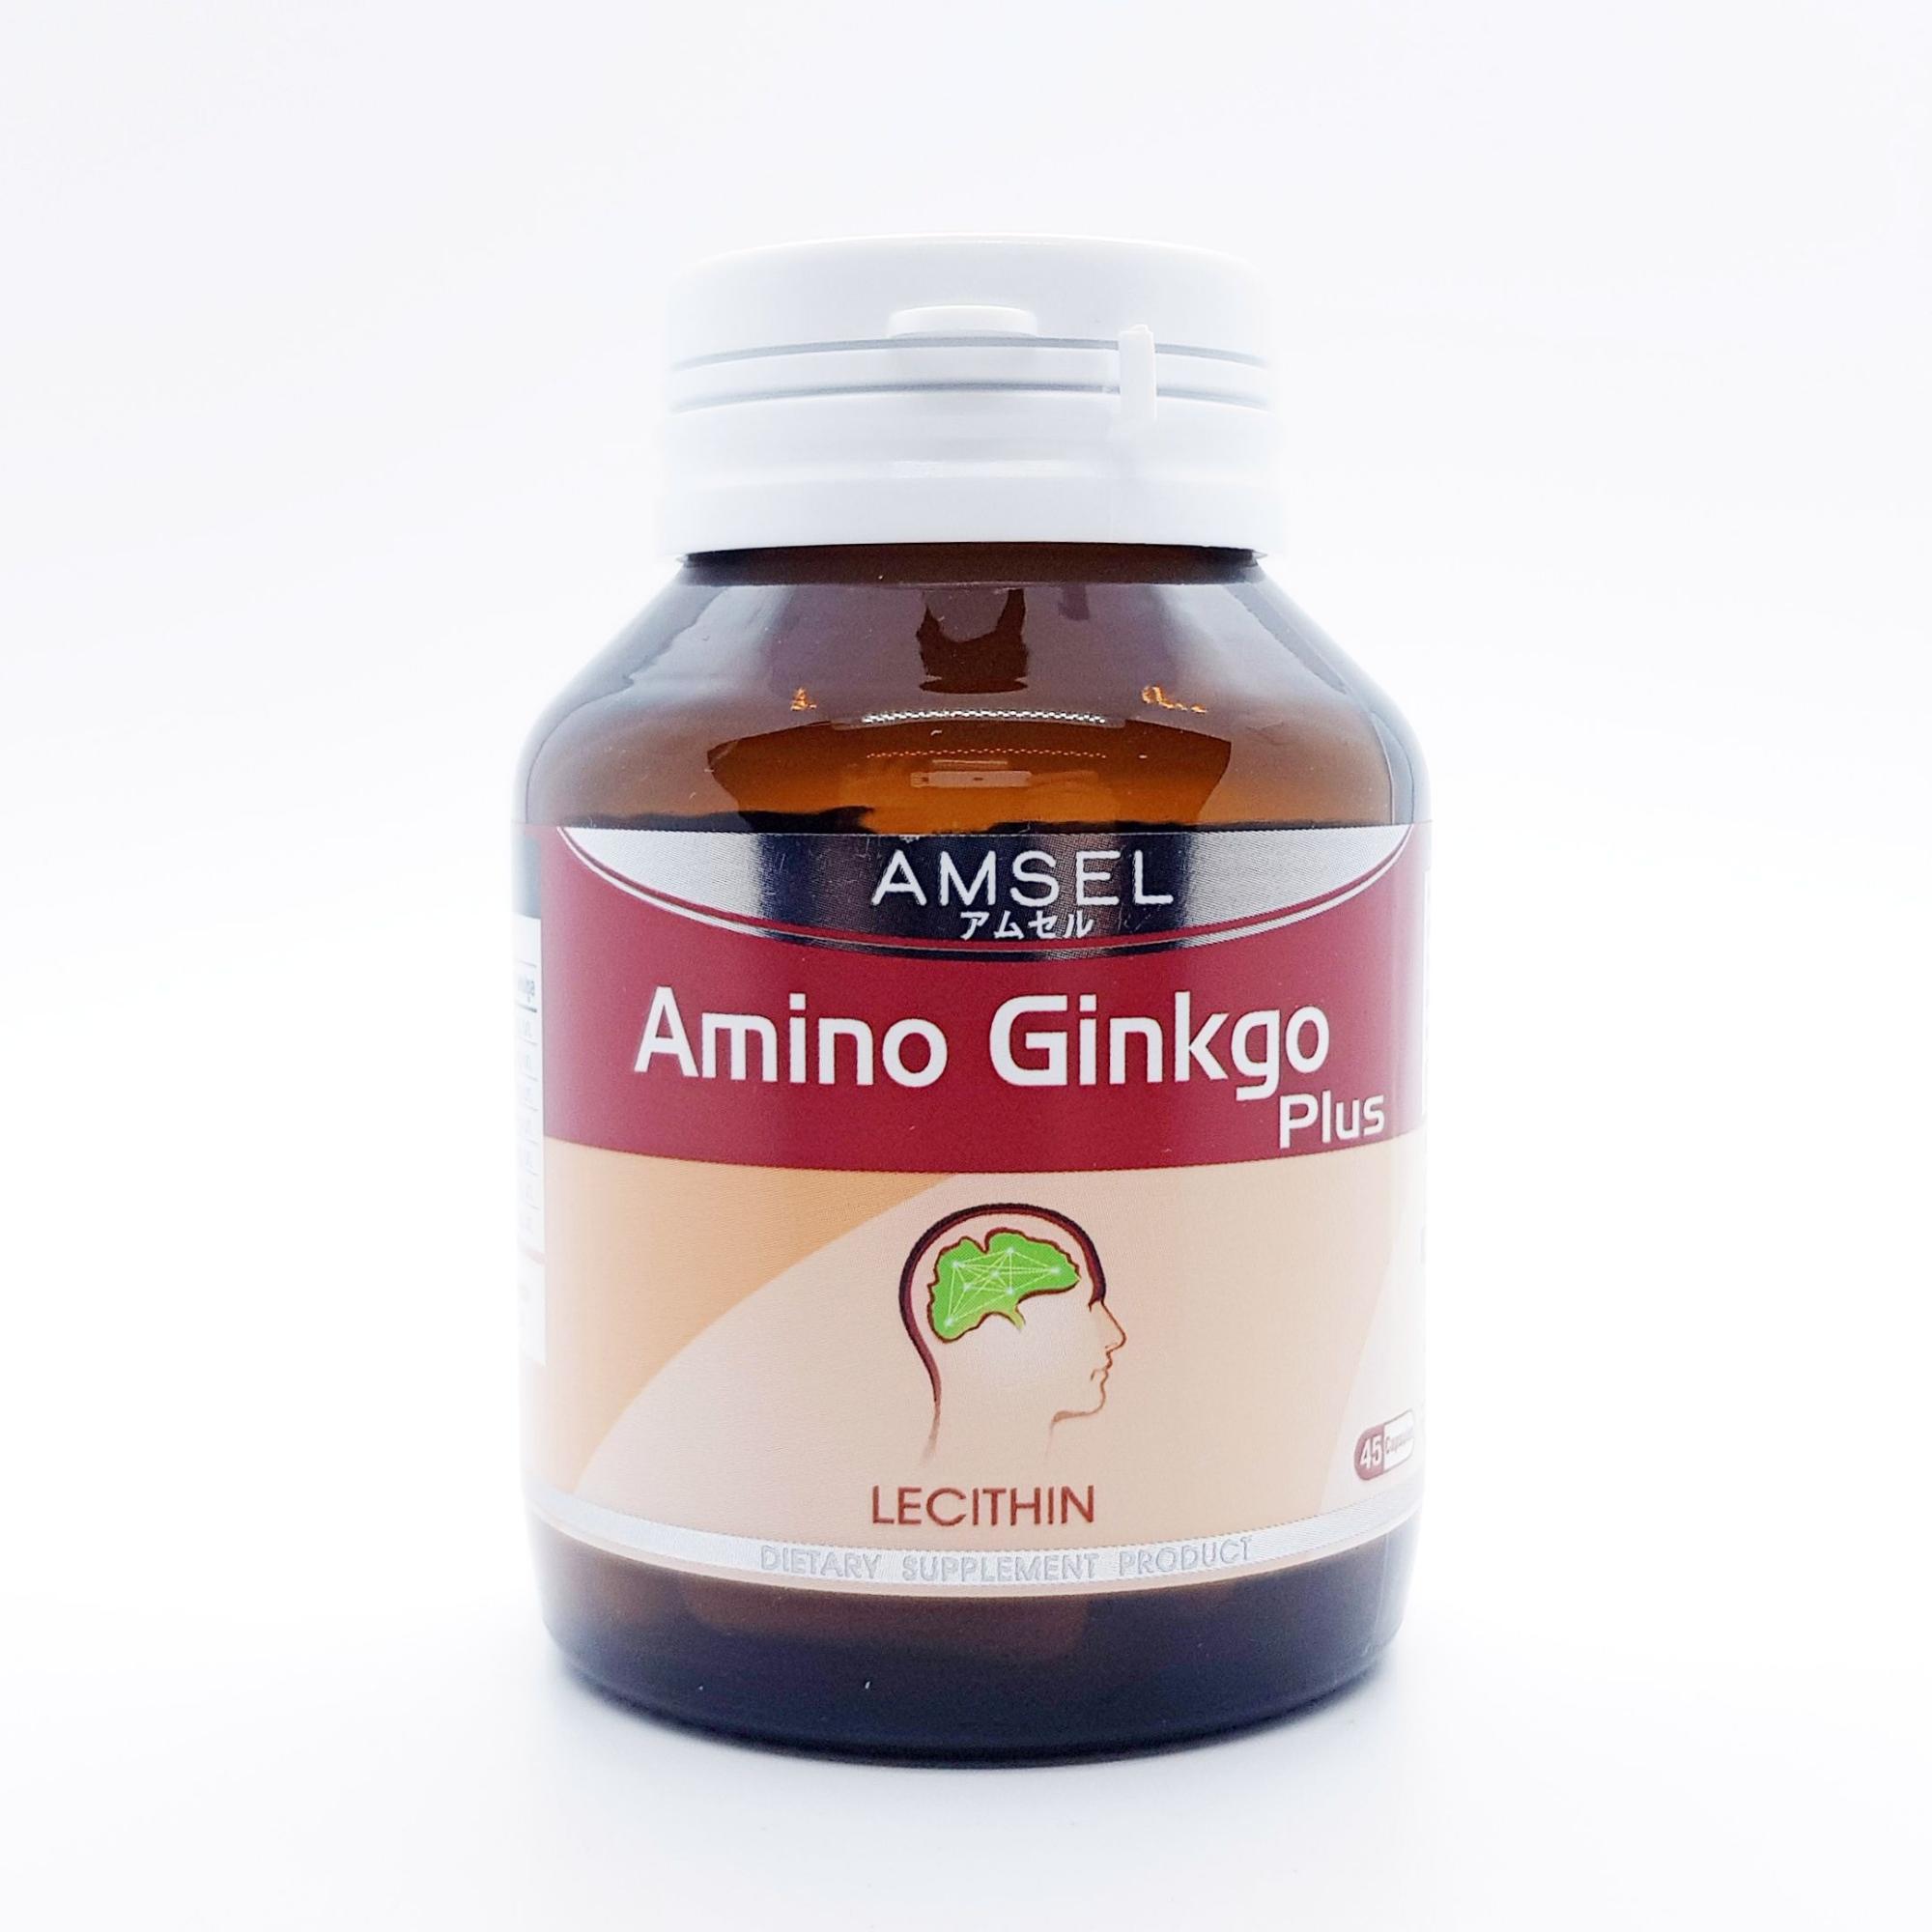 Amino Ginkgo Plus 45 capsules, ใบแปะก๊วยสกัด บำรุงสมอง ปลอดโปร่ง โล่ง คลายเครียด ต้านสมาธิสั้น ป้องกันสมองเสื่อม อะมิโน กิงโกะ พลัส 45 แคปซูล